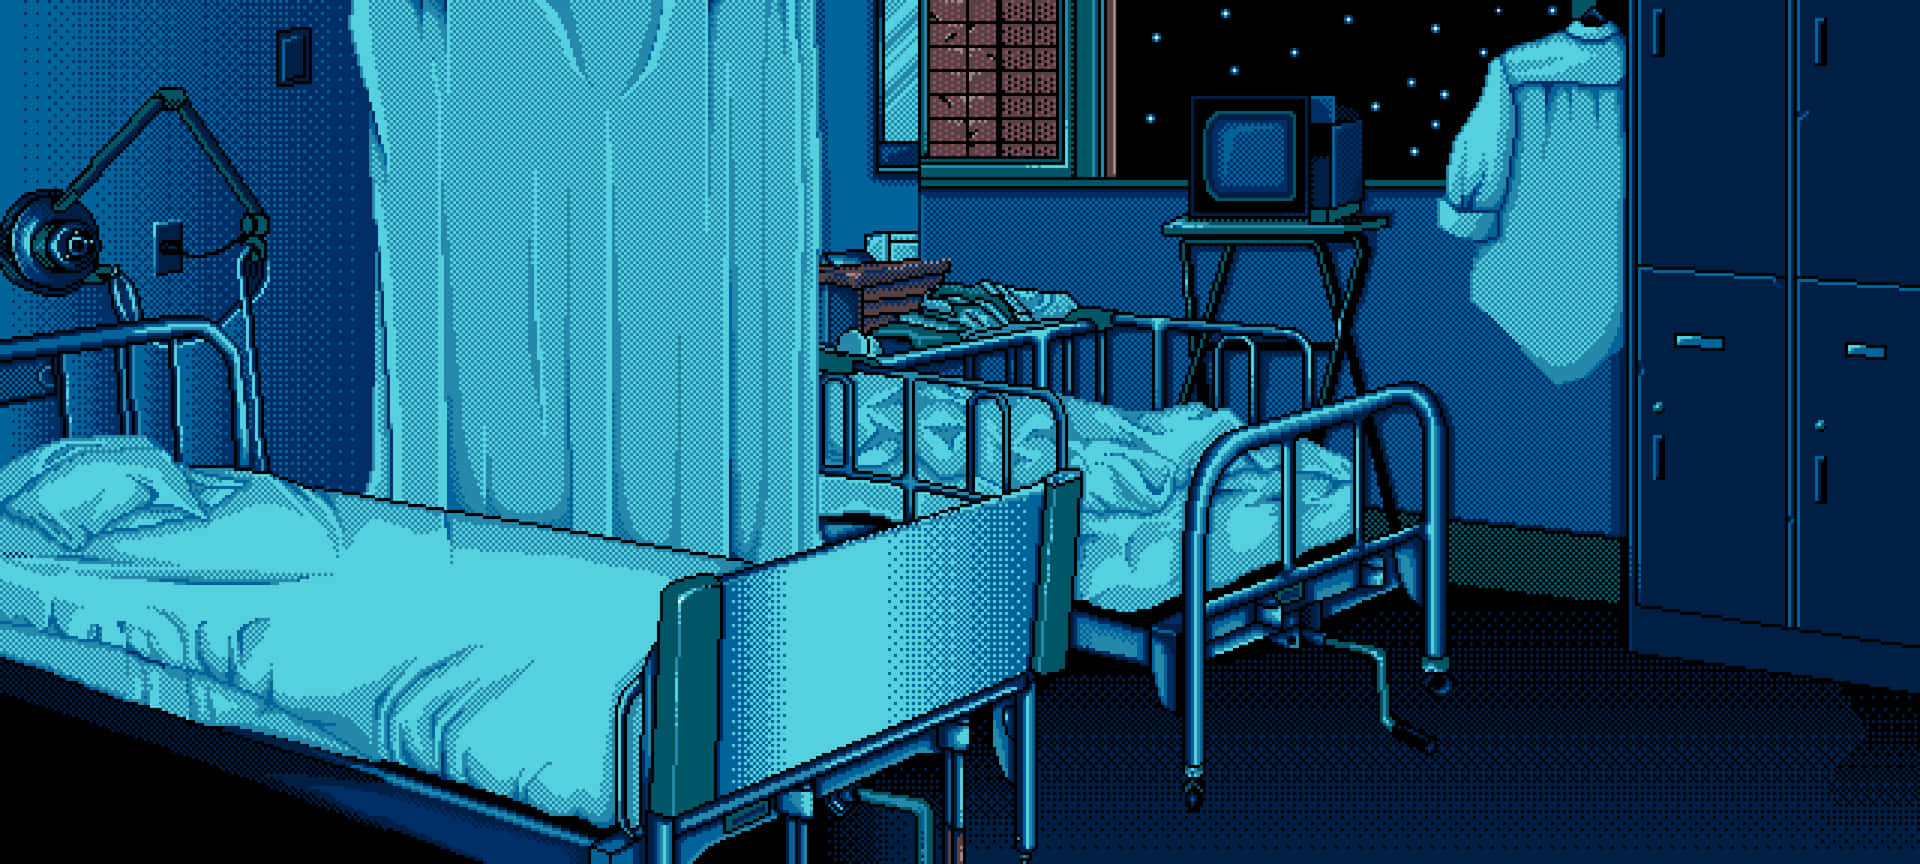 Retropixel Art Krankenhausbett Mit Nachthimmel Wallpaper